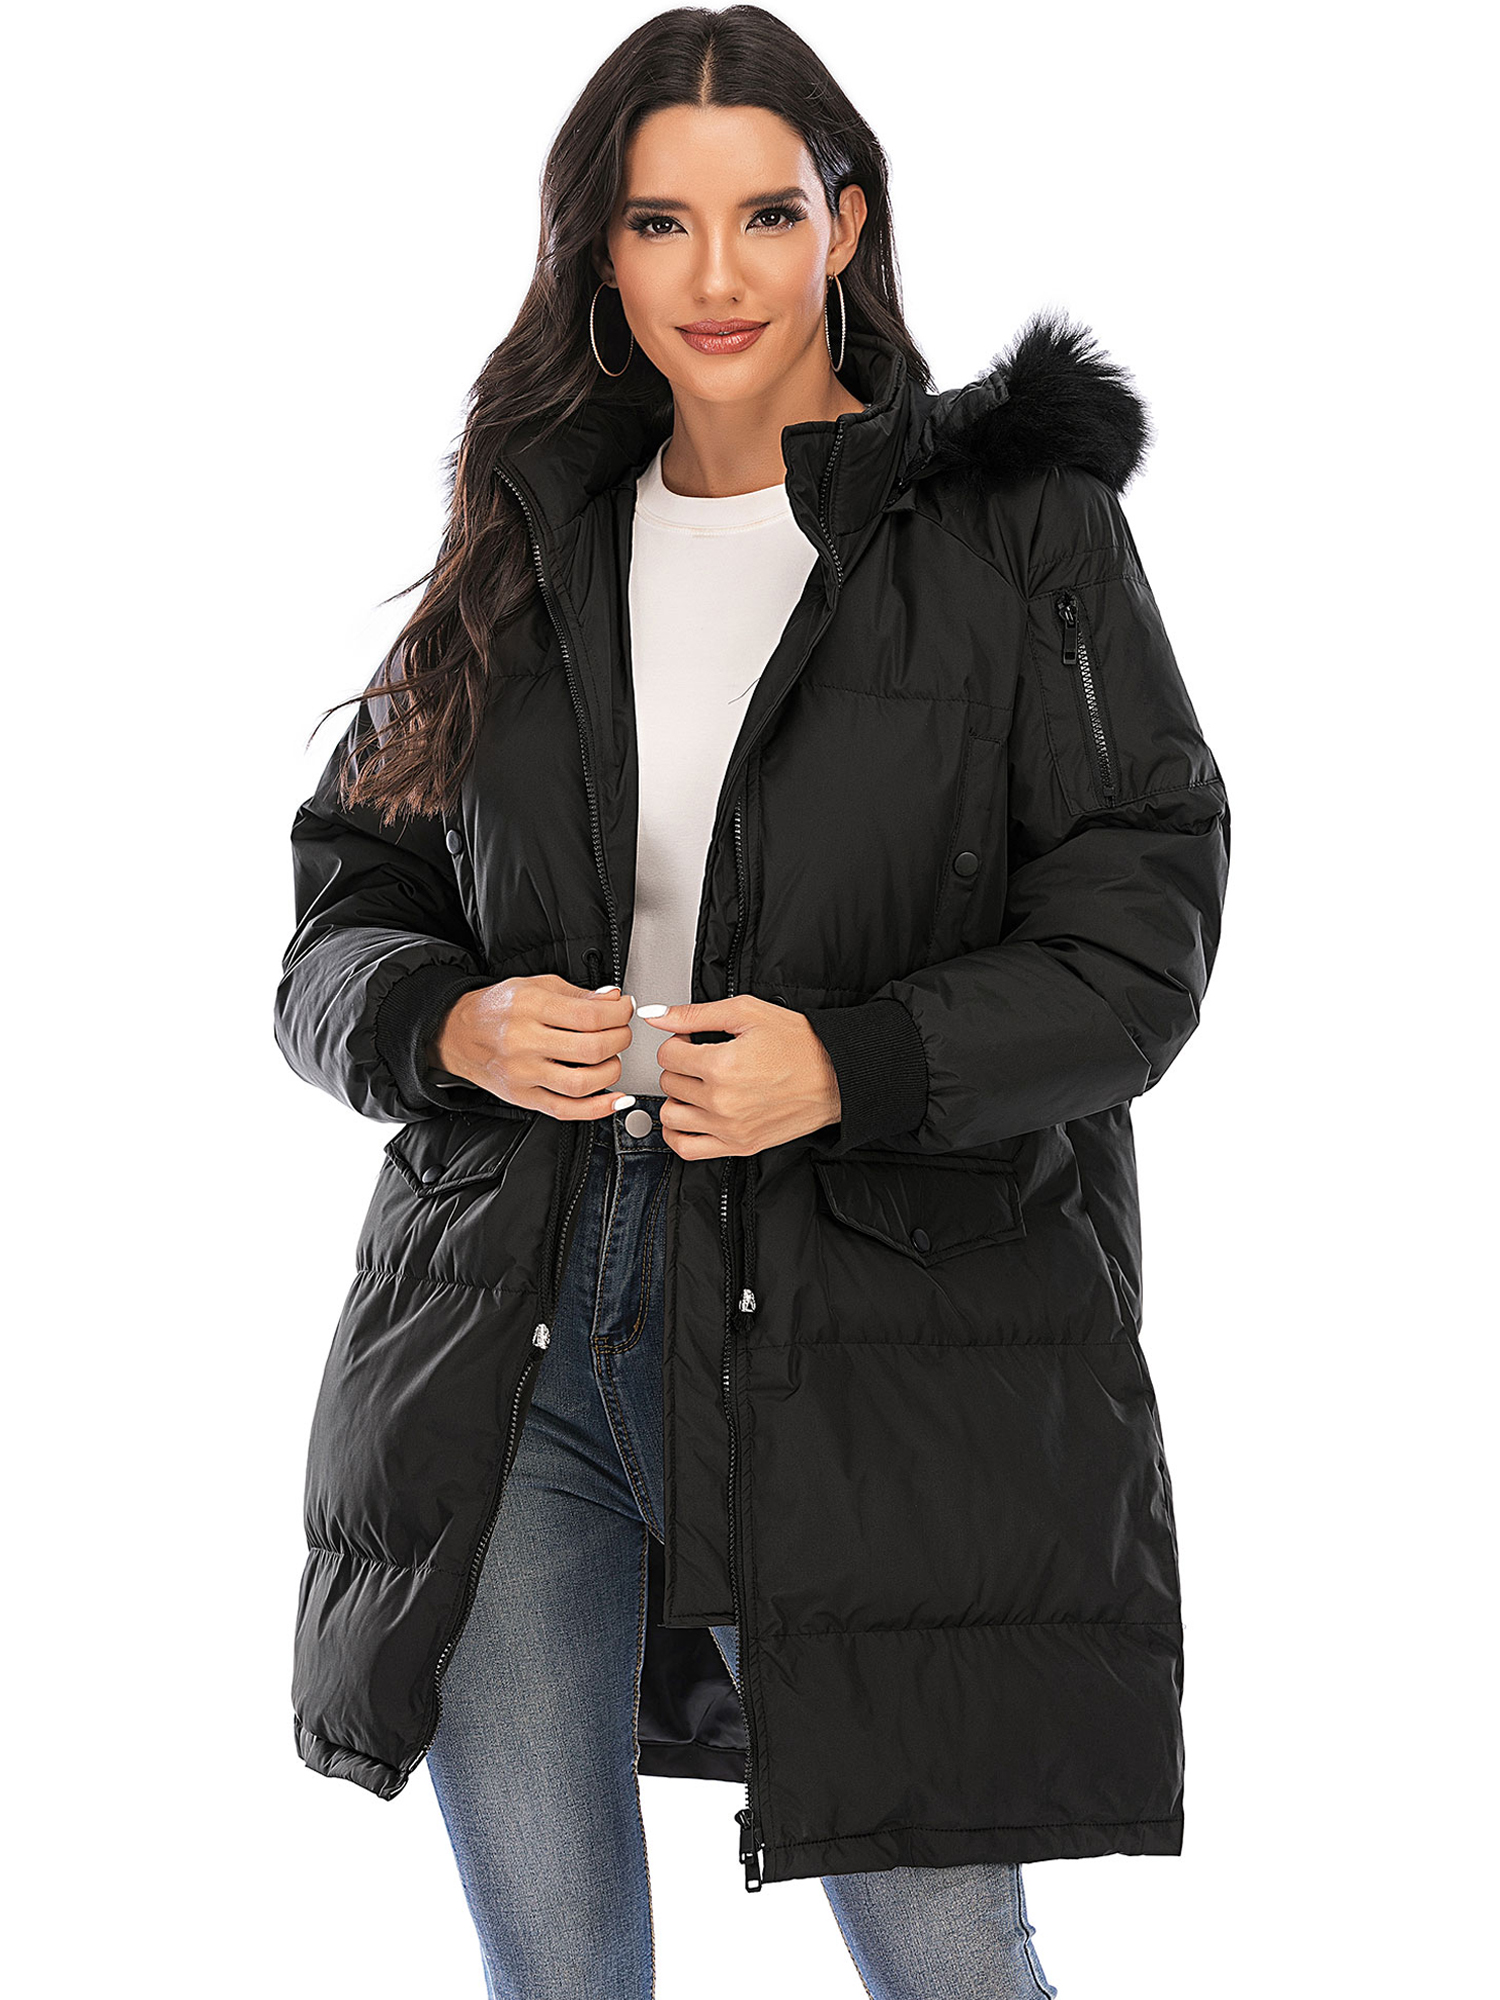 LELINTA Women's Plus Size Winter Warm Zipper Hoodie Long Jacket Waterproof Jacket Hooded Lightweight Raincoat Active Outdoor Trench Coat - image 5 of 7